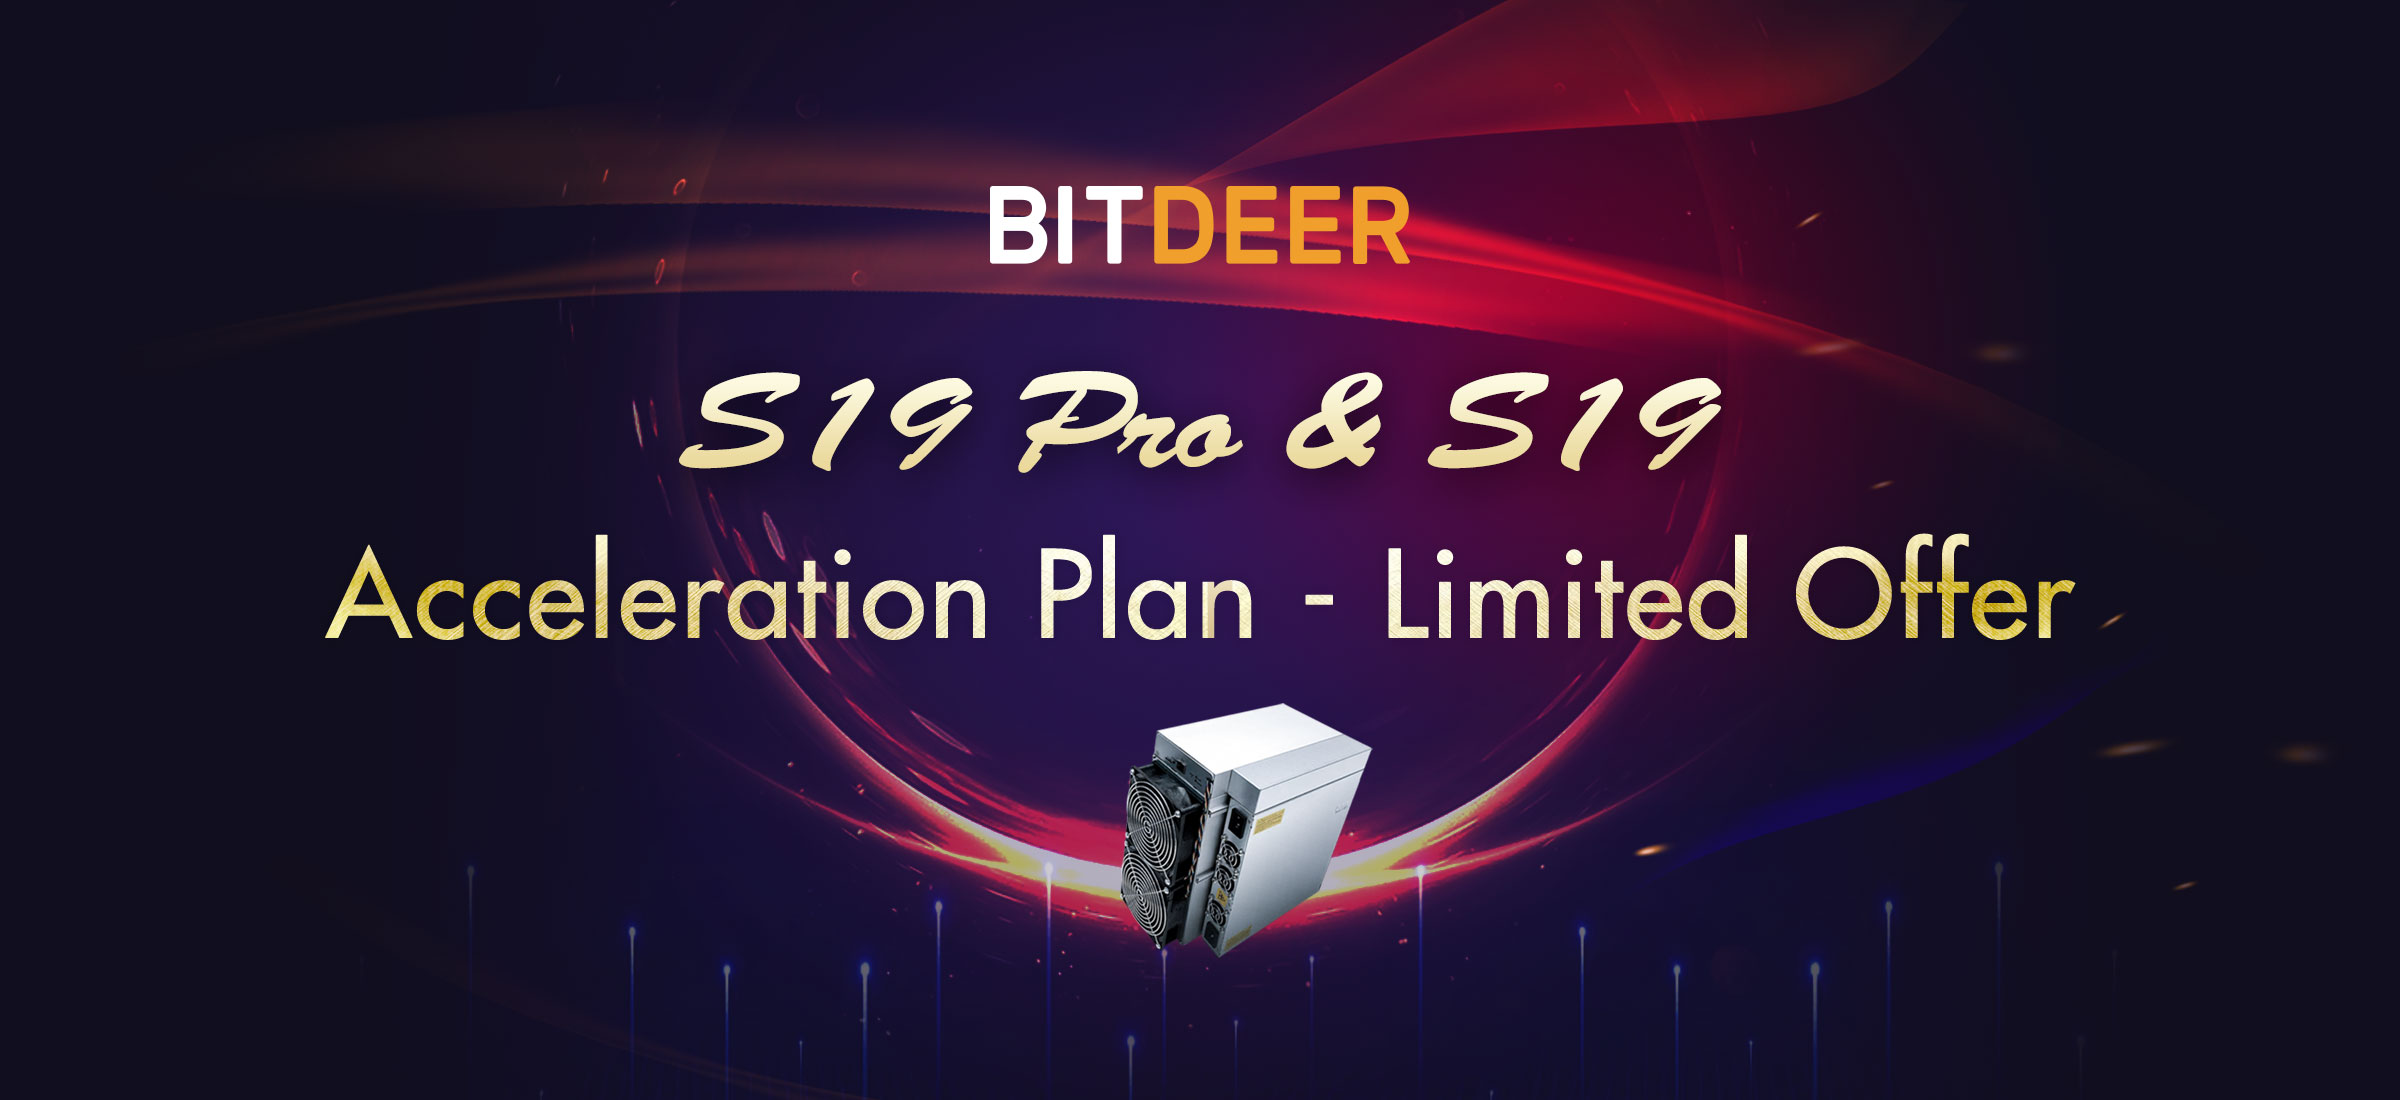 Bitdeer.com Announces the Return of the S19 Pro & S19 Plans